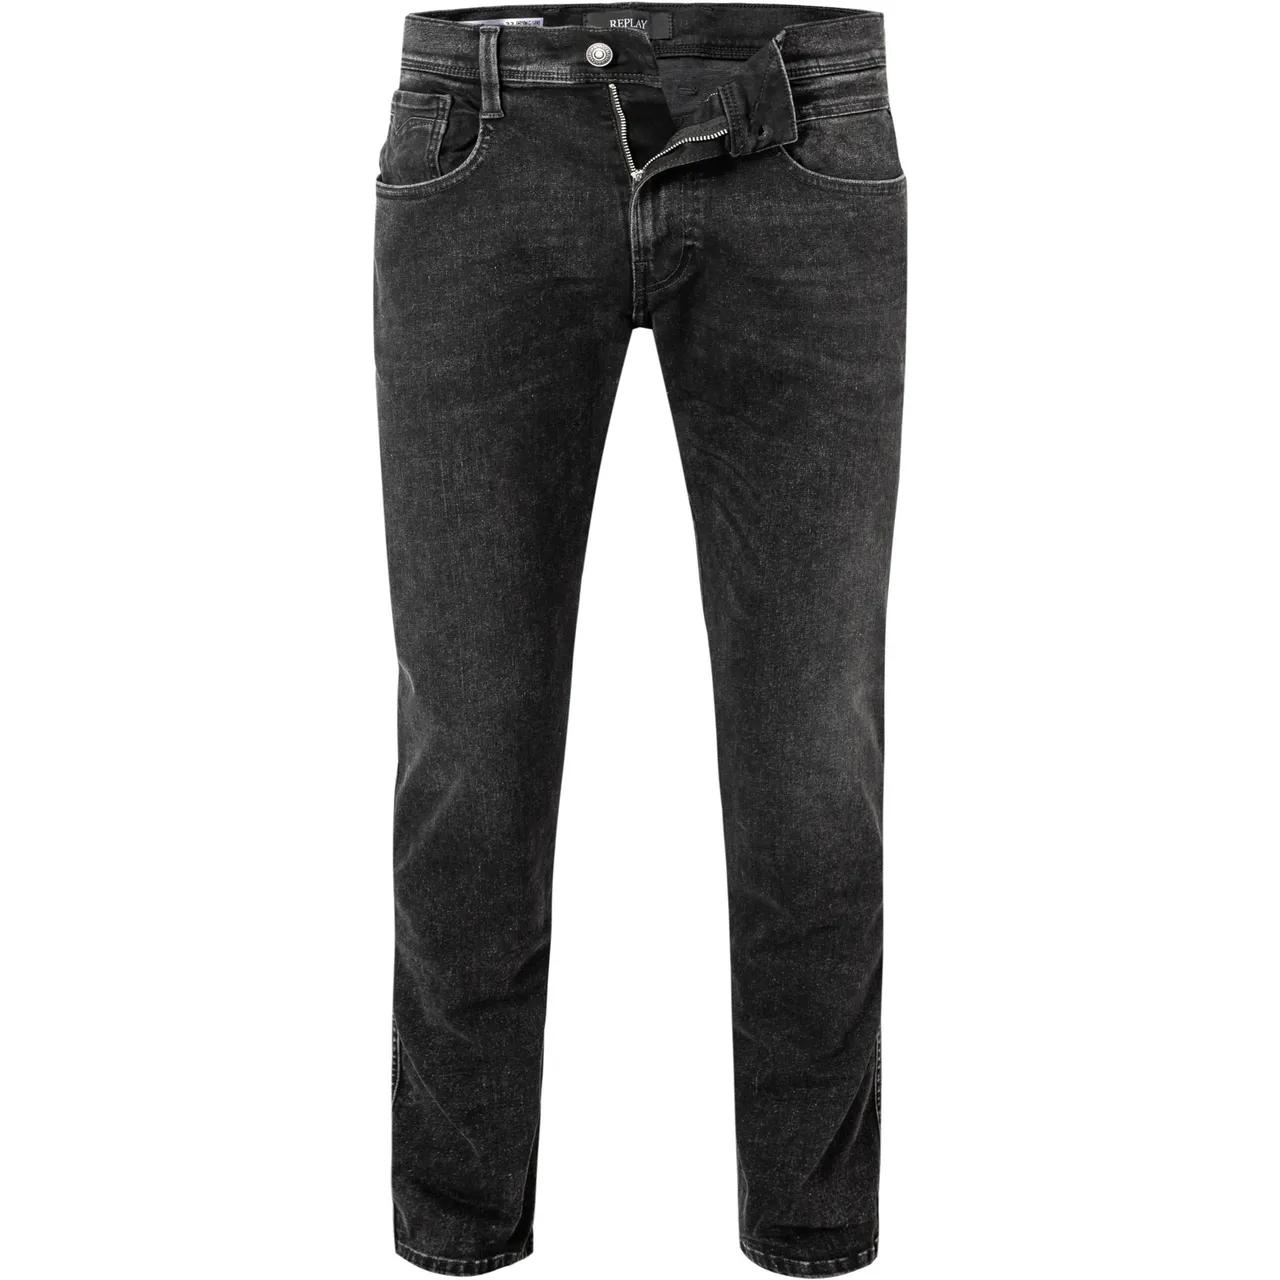 Replay Herren Jeans schwarz Baumwoll-Stretch Slim Fit